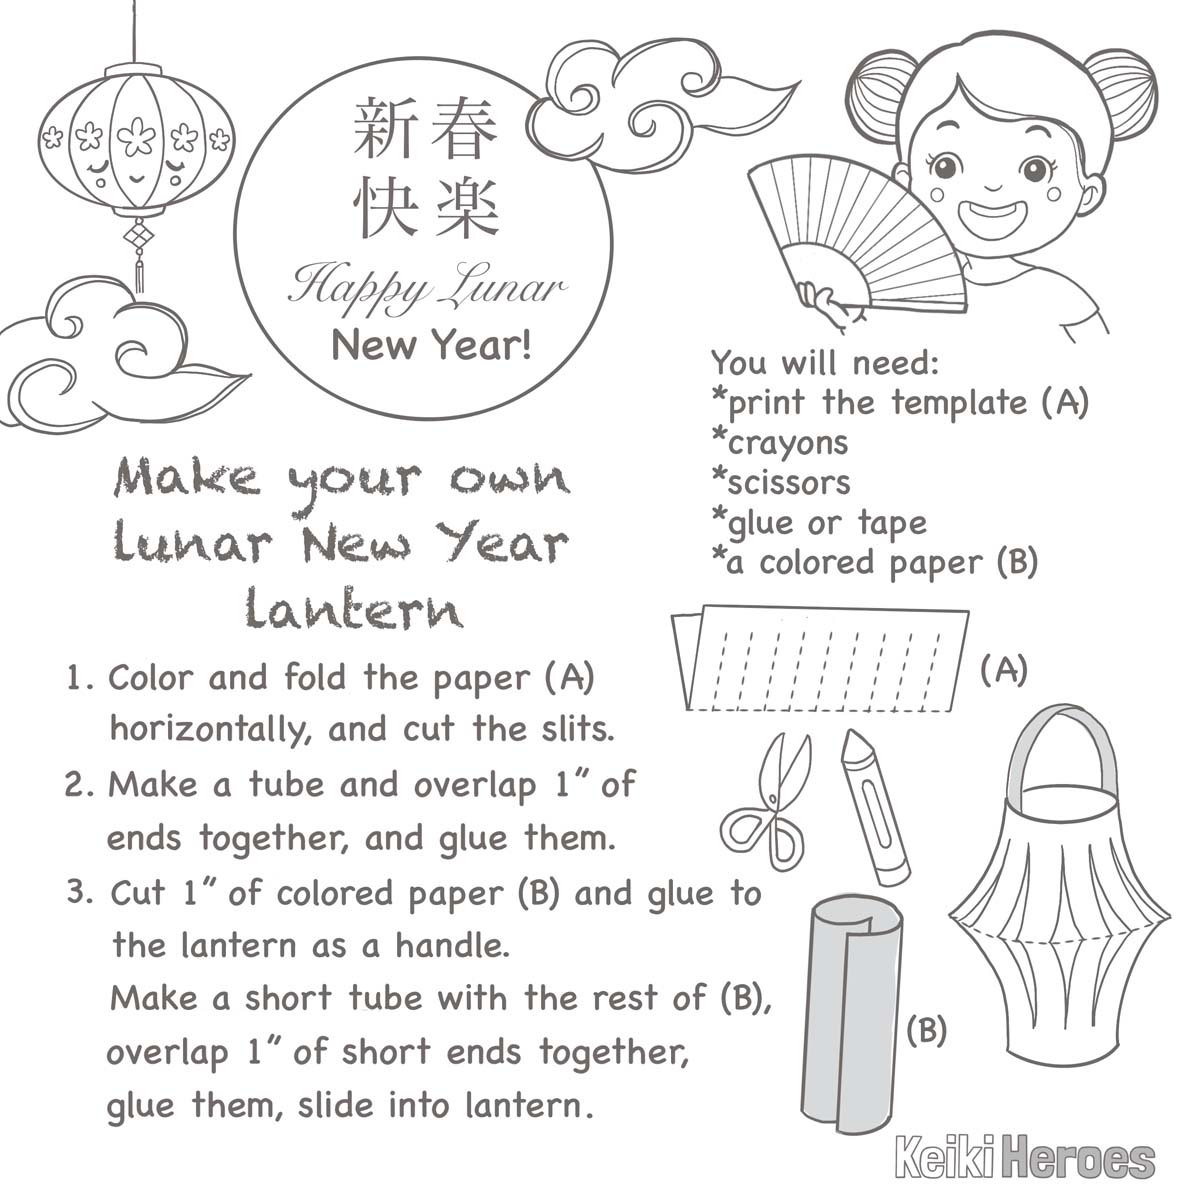 Make a lunar new year lantern